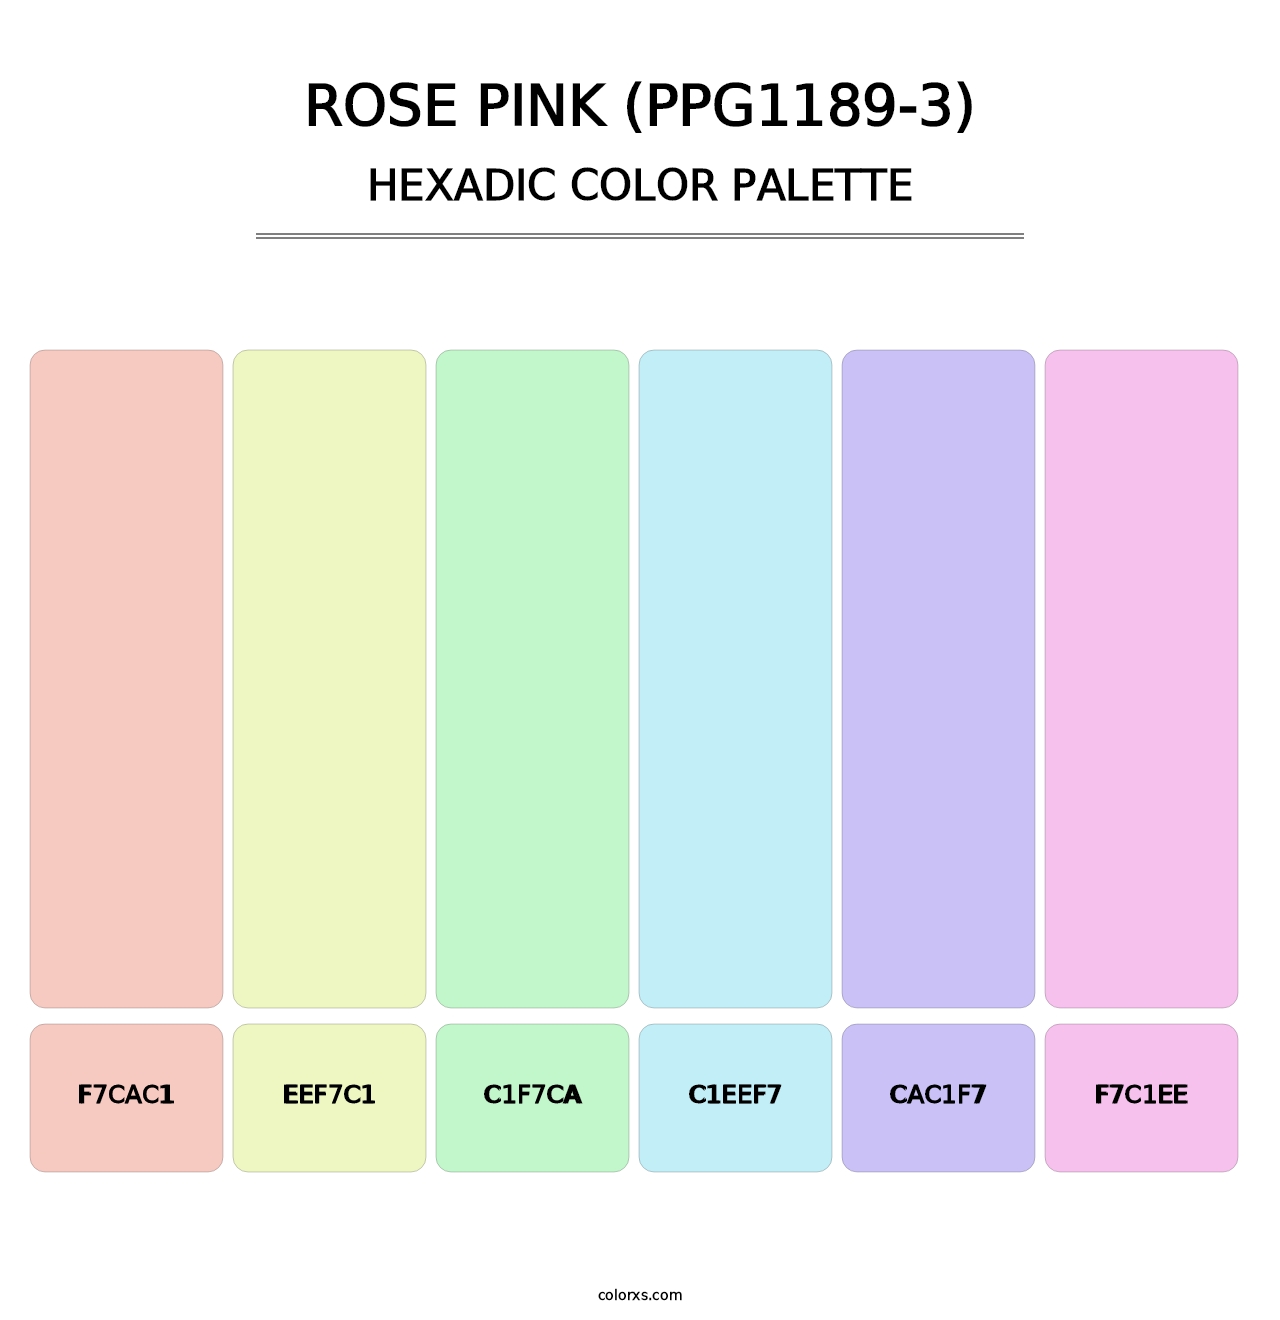 Rose Pink (PPG1189-3) - Hexadic Color Palette